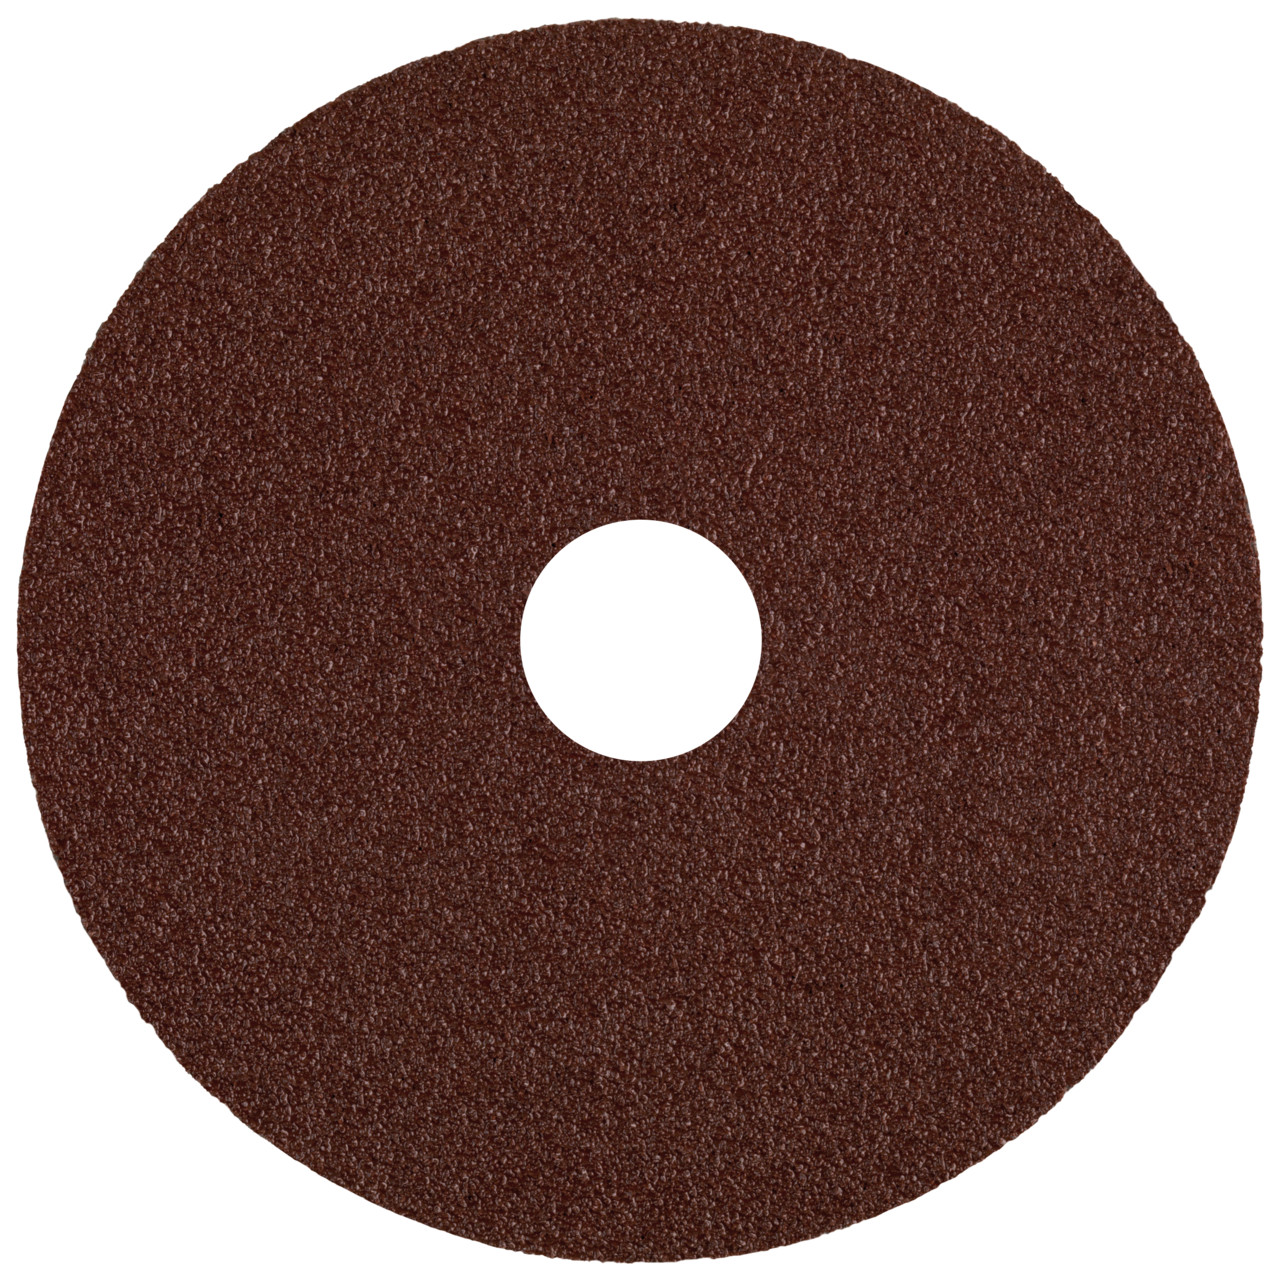 Tyrolit A-B02 V Vulcanised fibre disc DxH 180x22 For steel, non-ferrous metals and wood, P36, shape: DISC, Art. 34286508